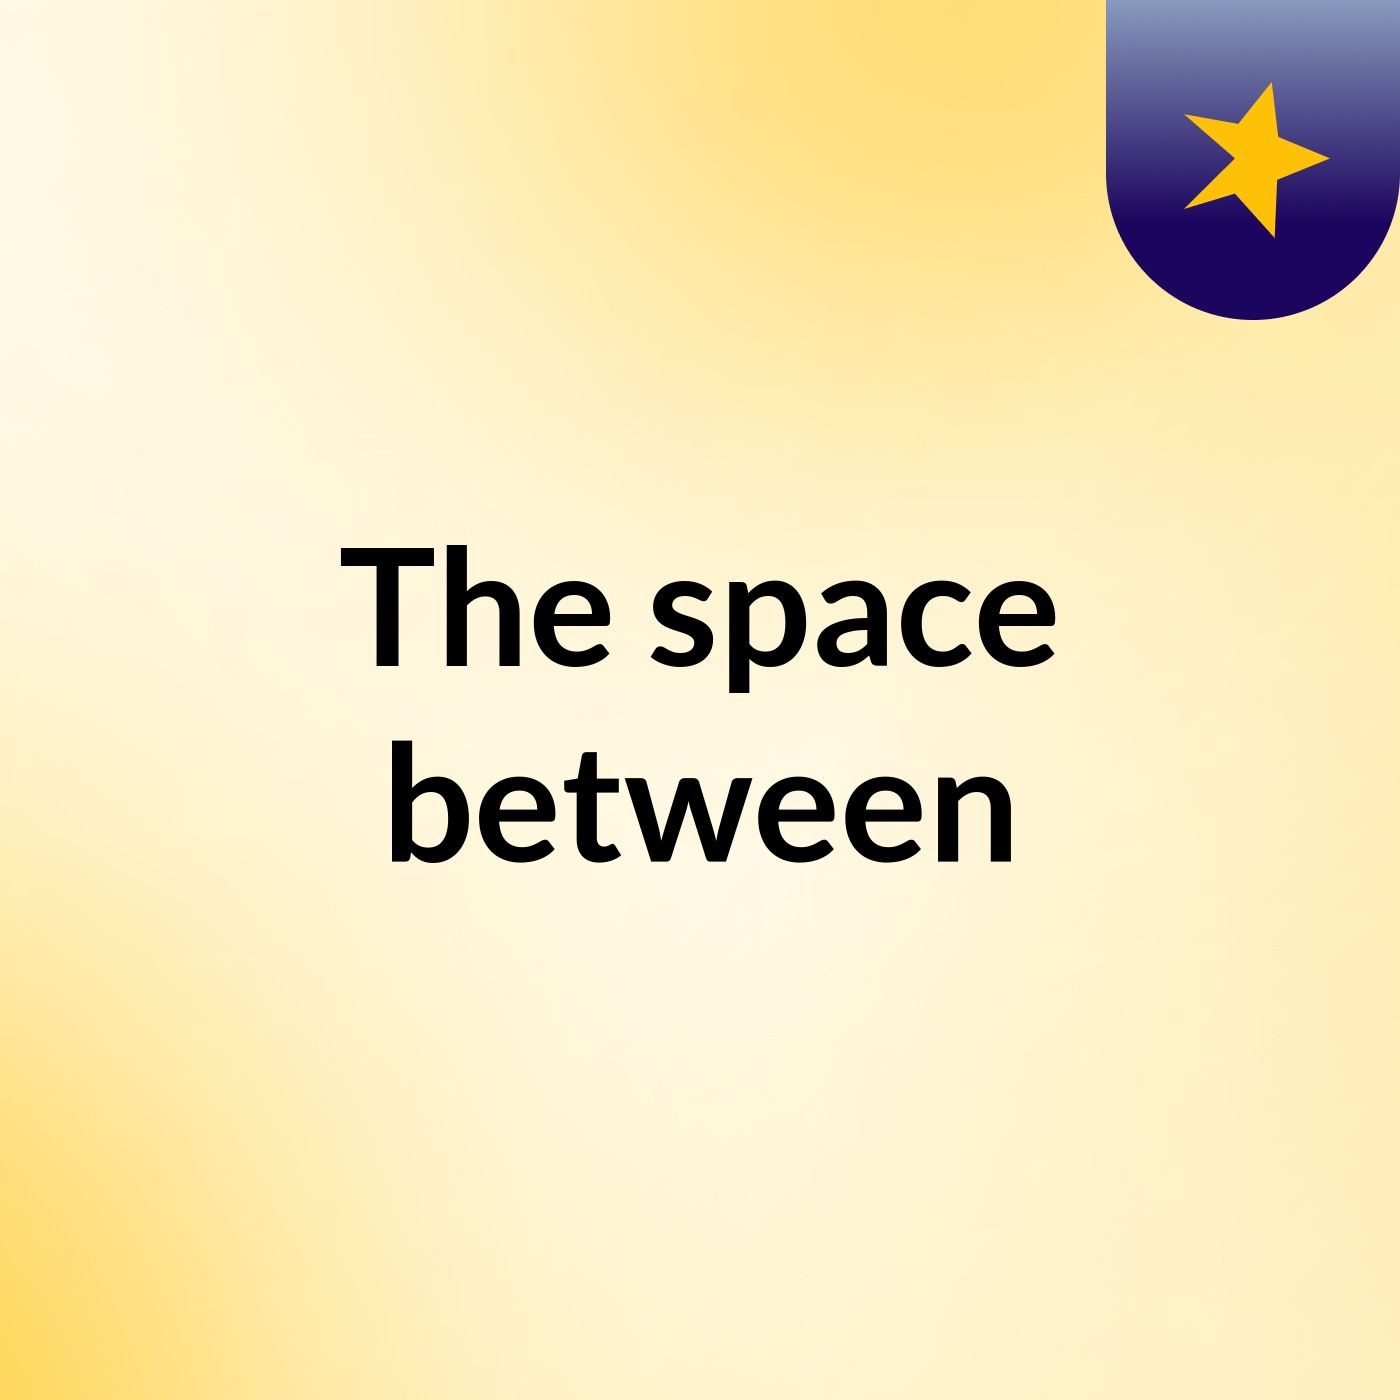 The space between